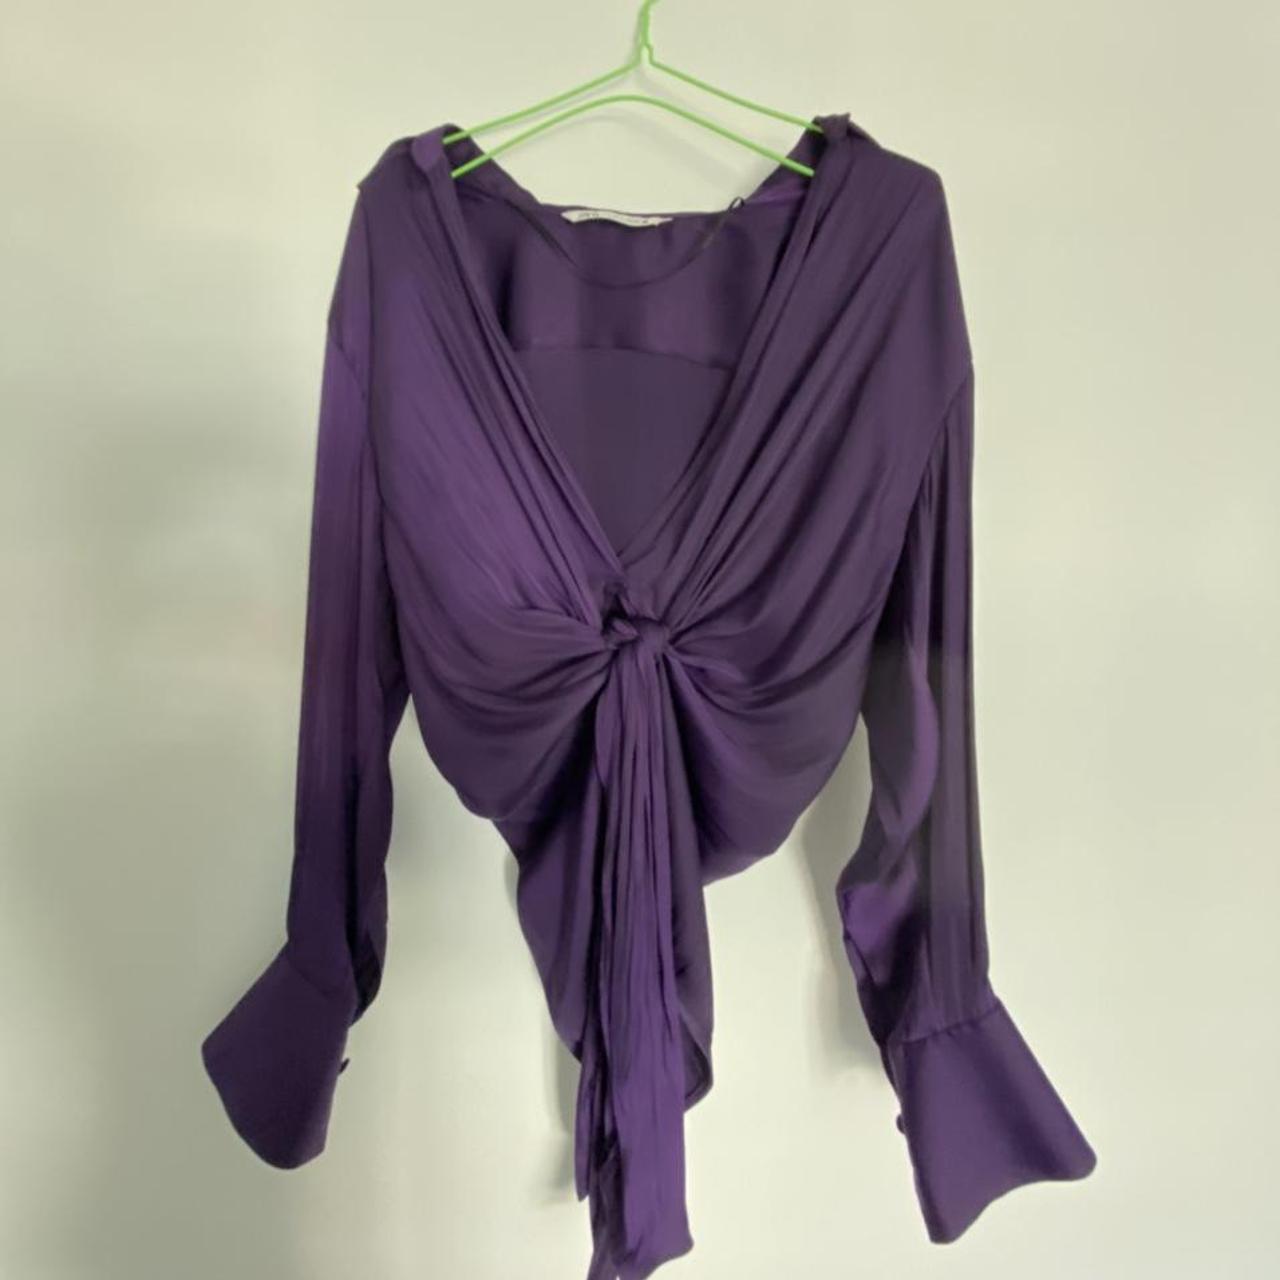 Zara Wrap up satin shirt in deep purple 💜 Size:... - Depop